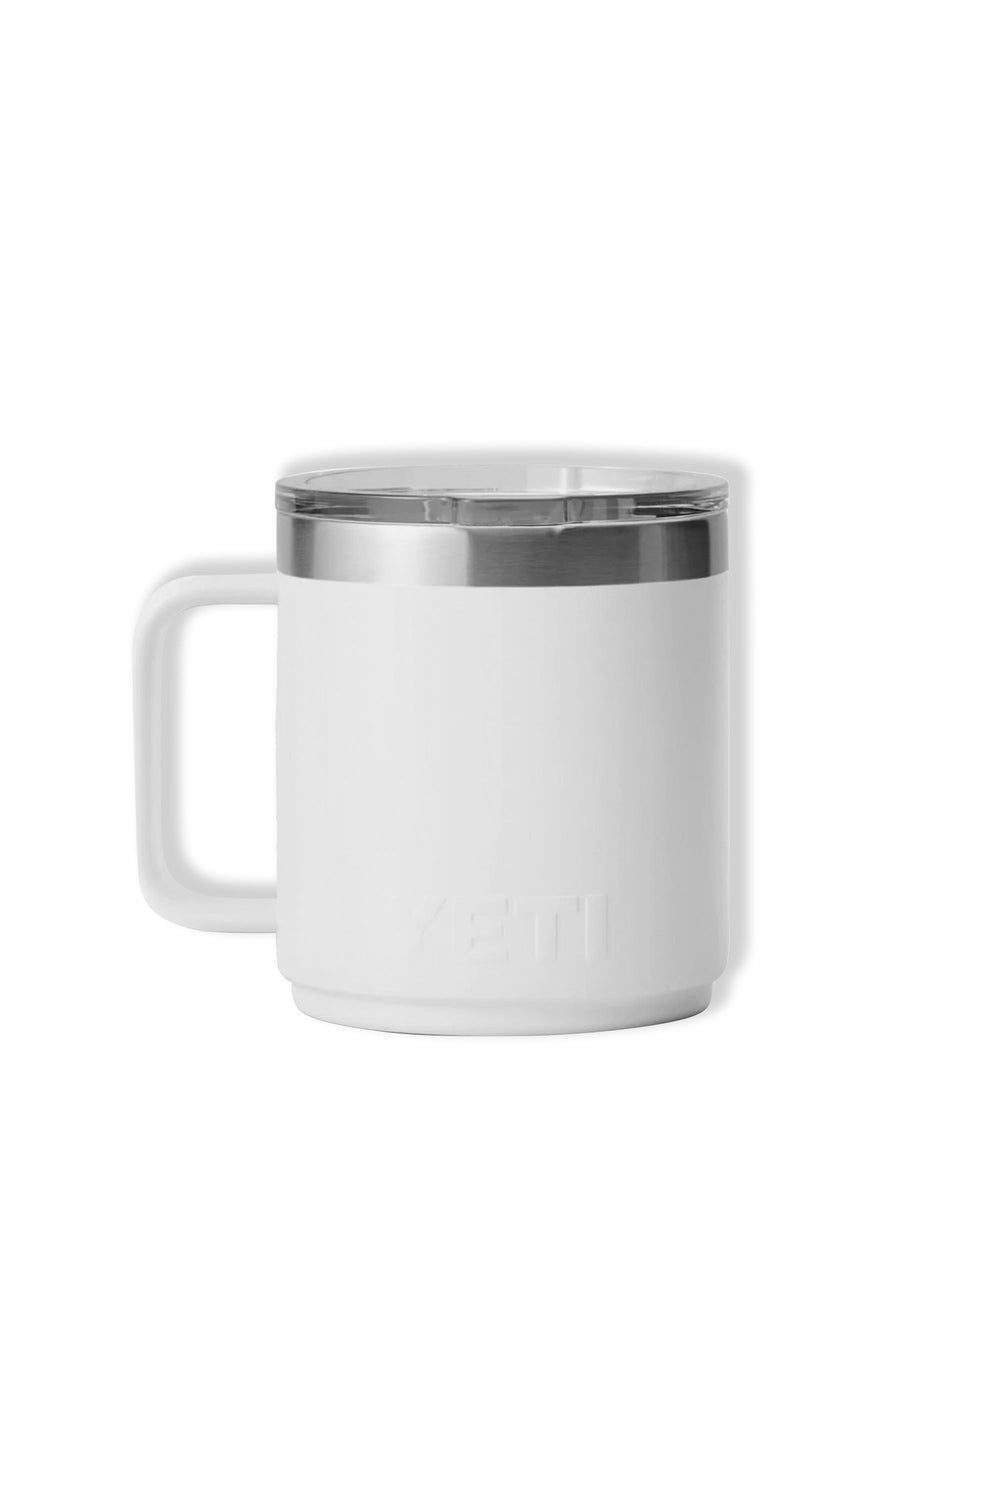 YETI - 10 oz Mug – beamifymx